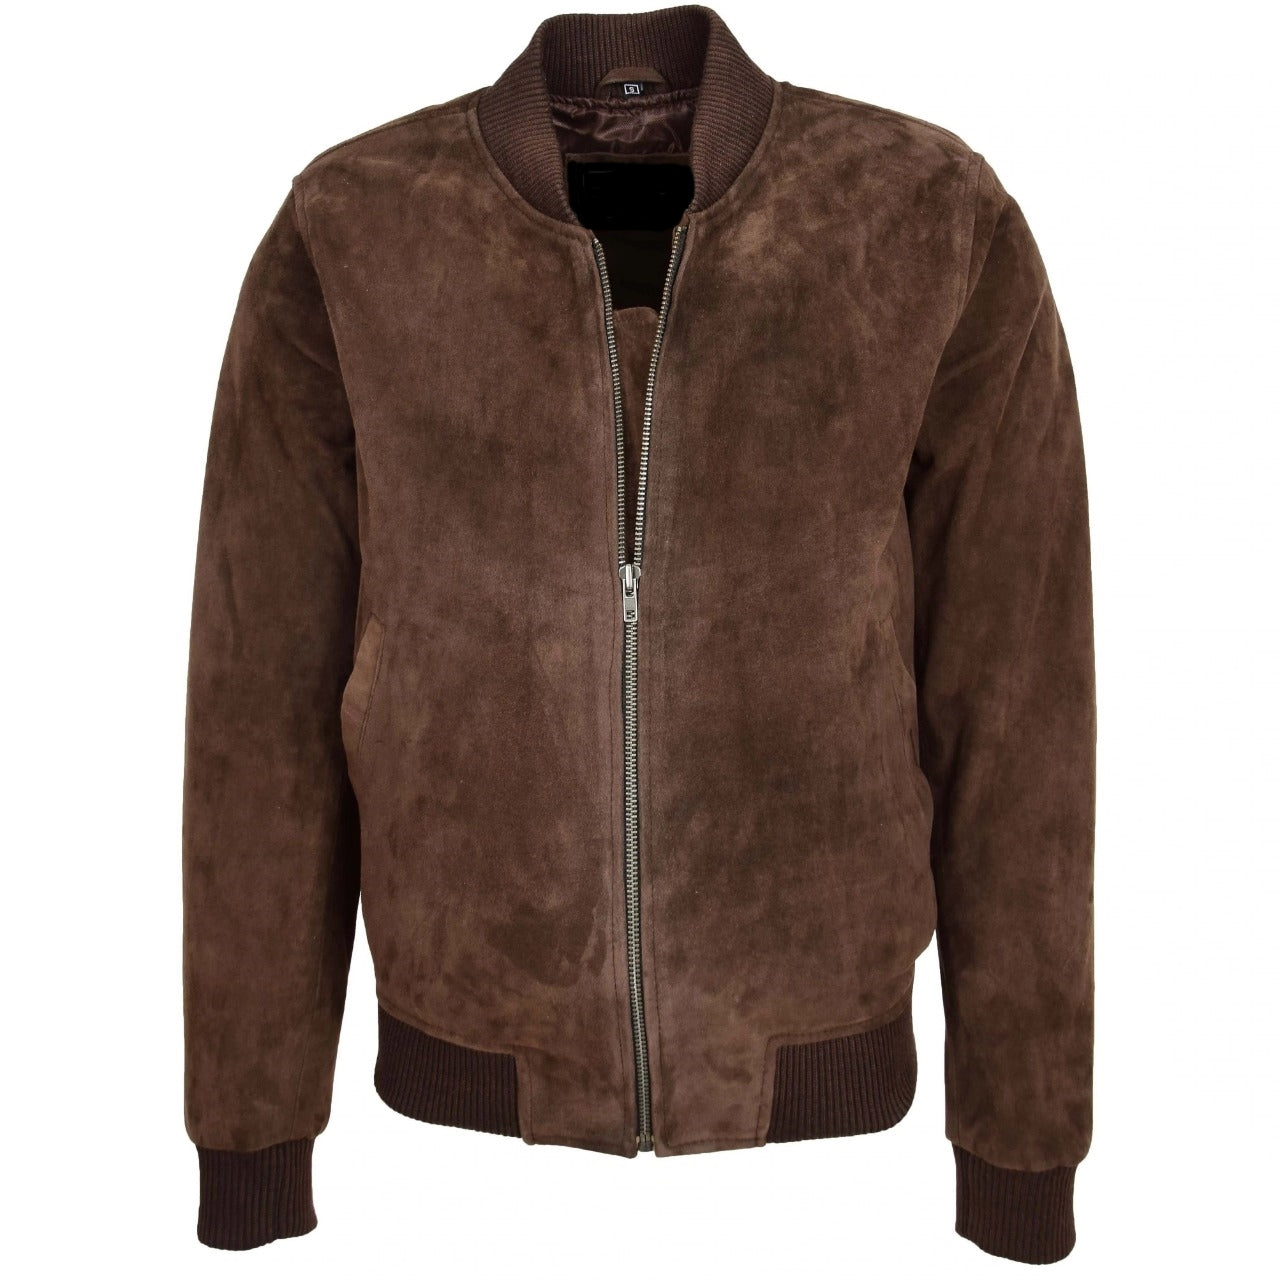 A2 Bomber Men's Dark Brown Suede Leather Jacket